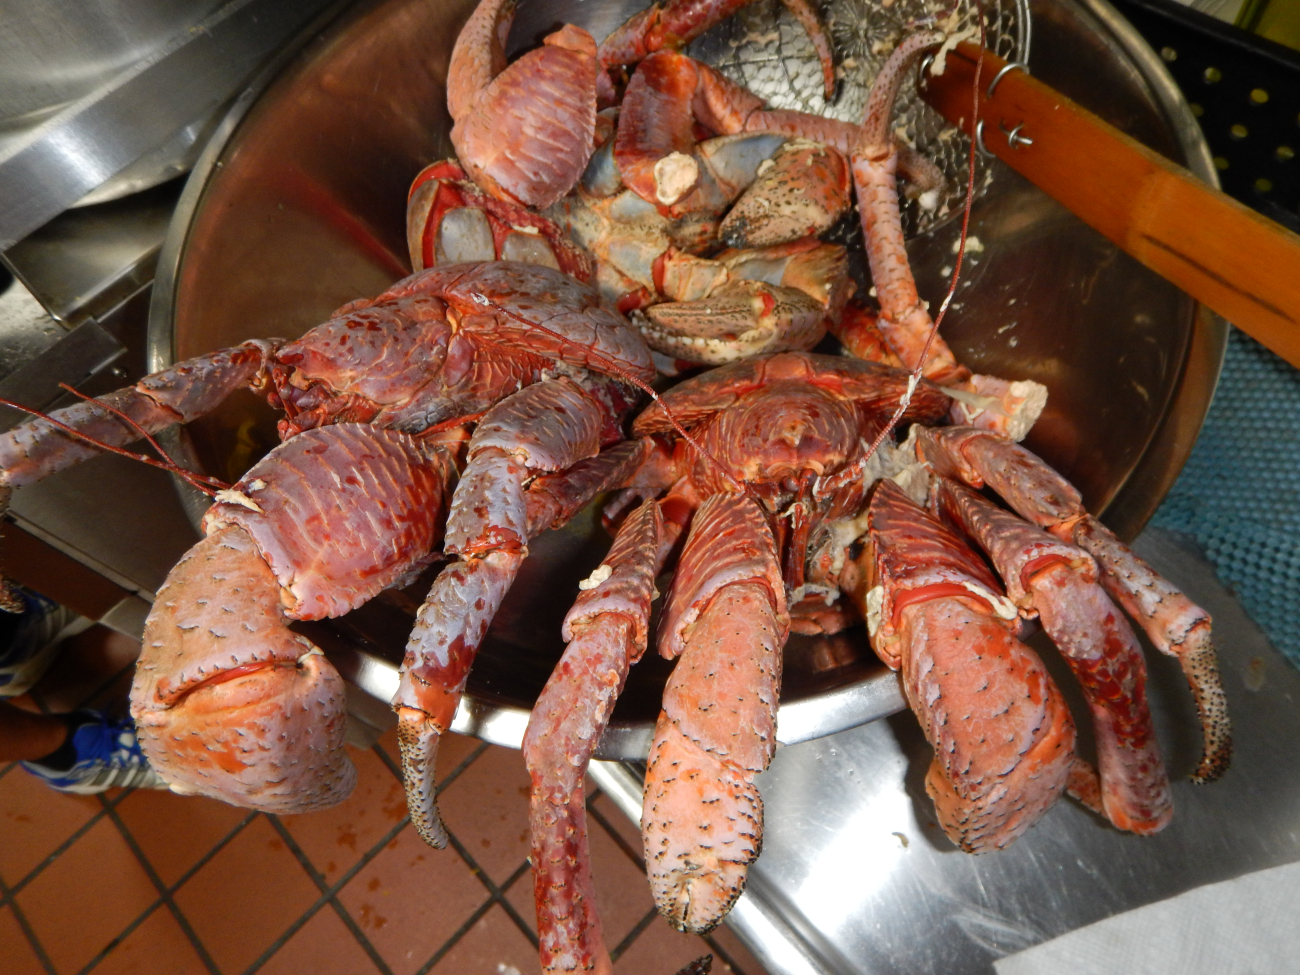 A pot of boiled coconut crabs - Birgus latro